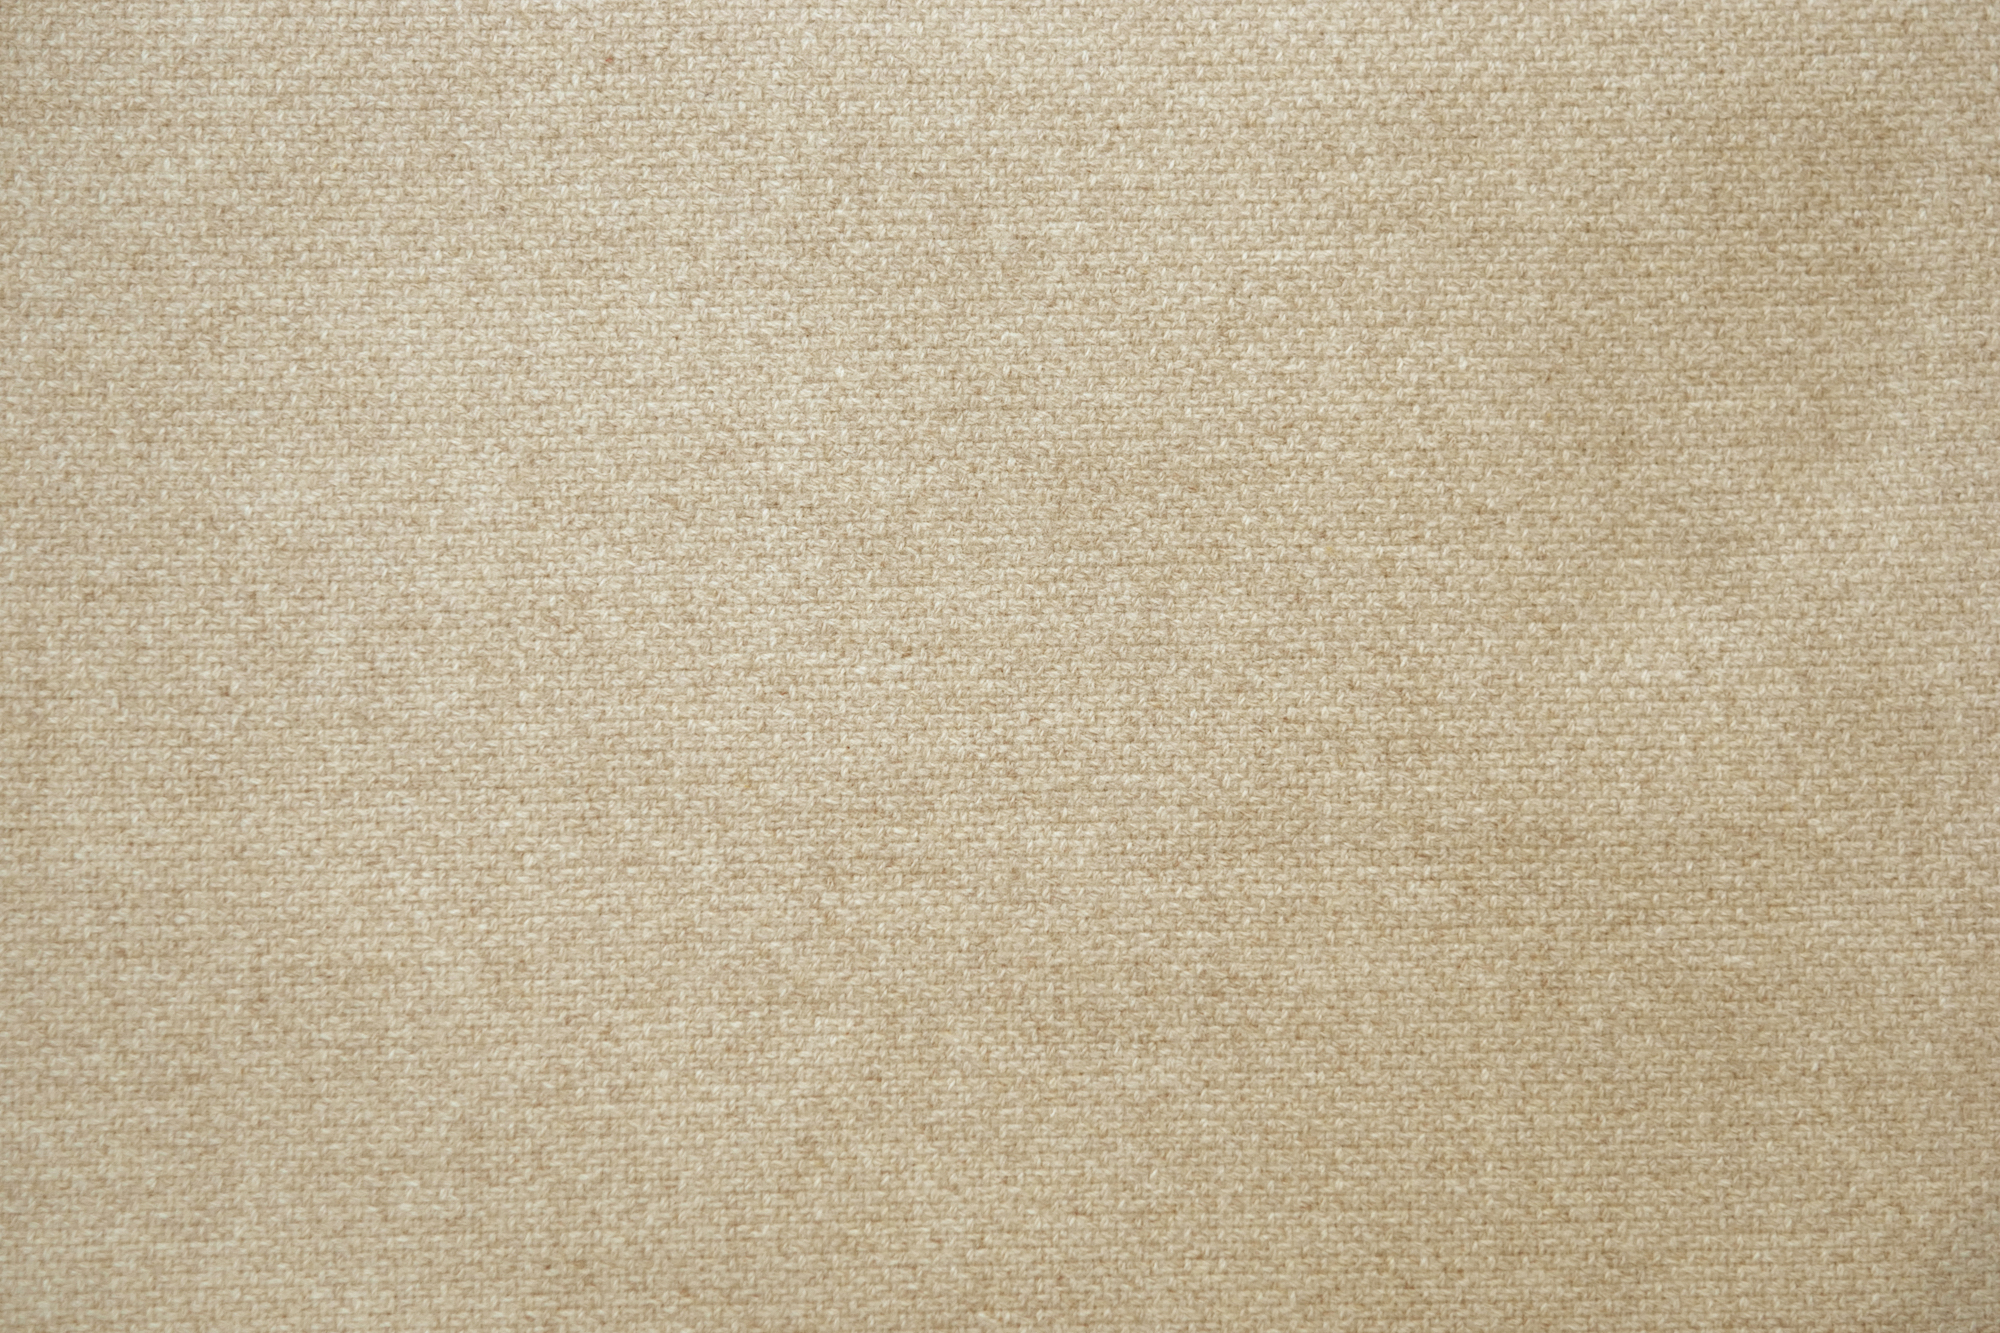 Introducing: Escorial Tweed – Permanent Style